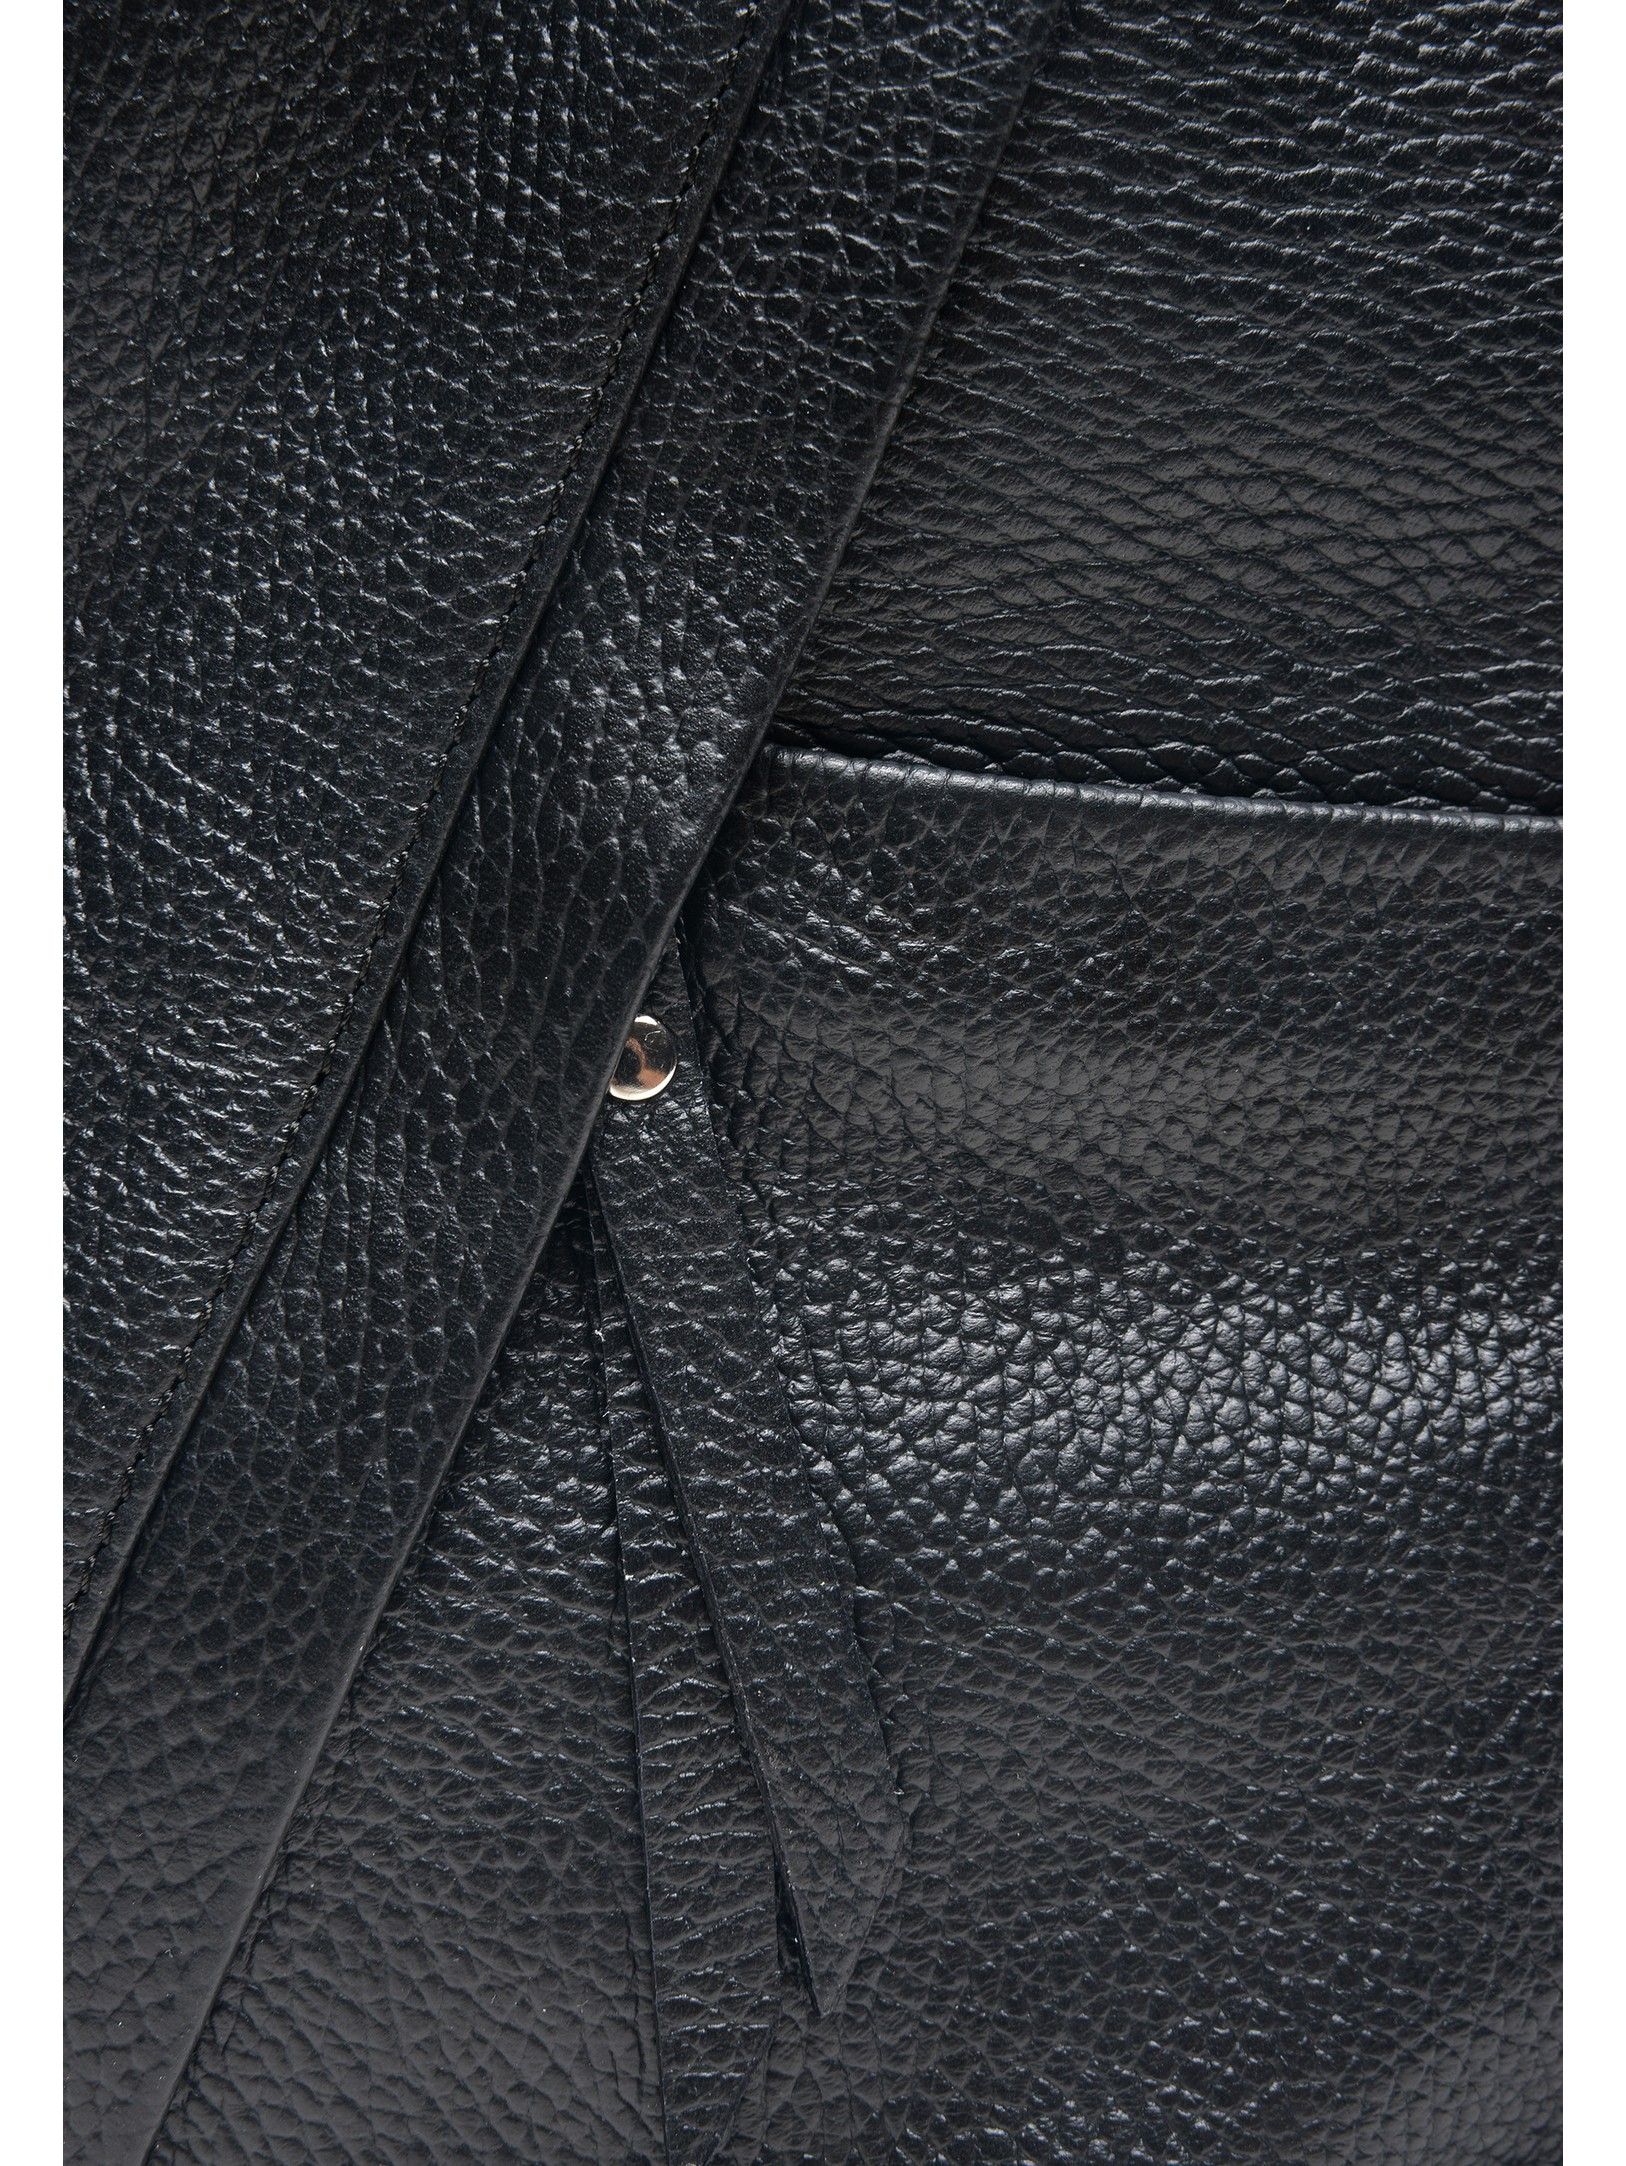 Backpack
100% cow leather
Zip closure
Inner zip pocket
Back zip pocket
Dimensions (L): 22x42x14 cm
Handle: 20 cm non adjustable
Shoulder strap: 2x80 cm adjustable